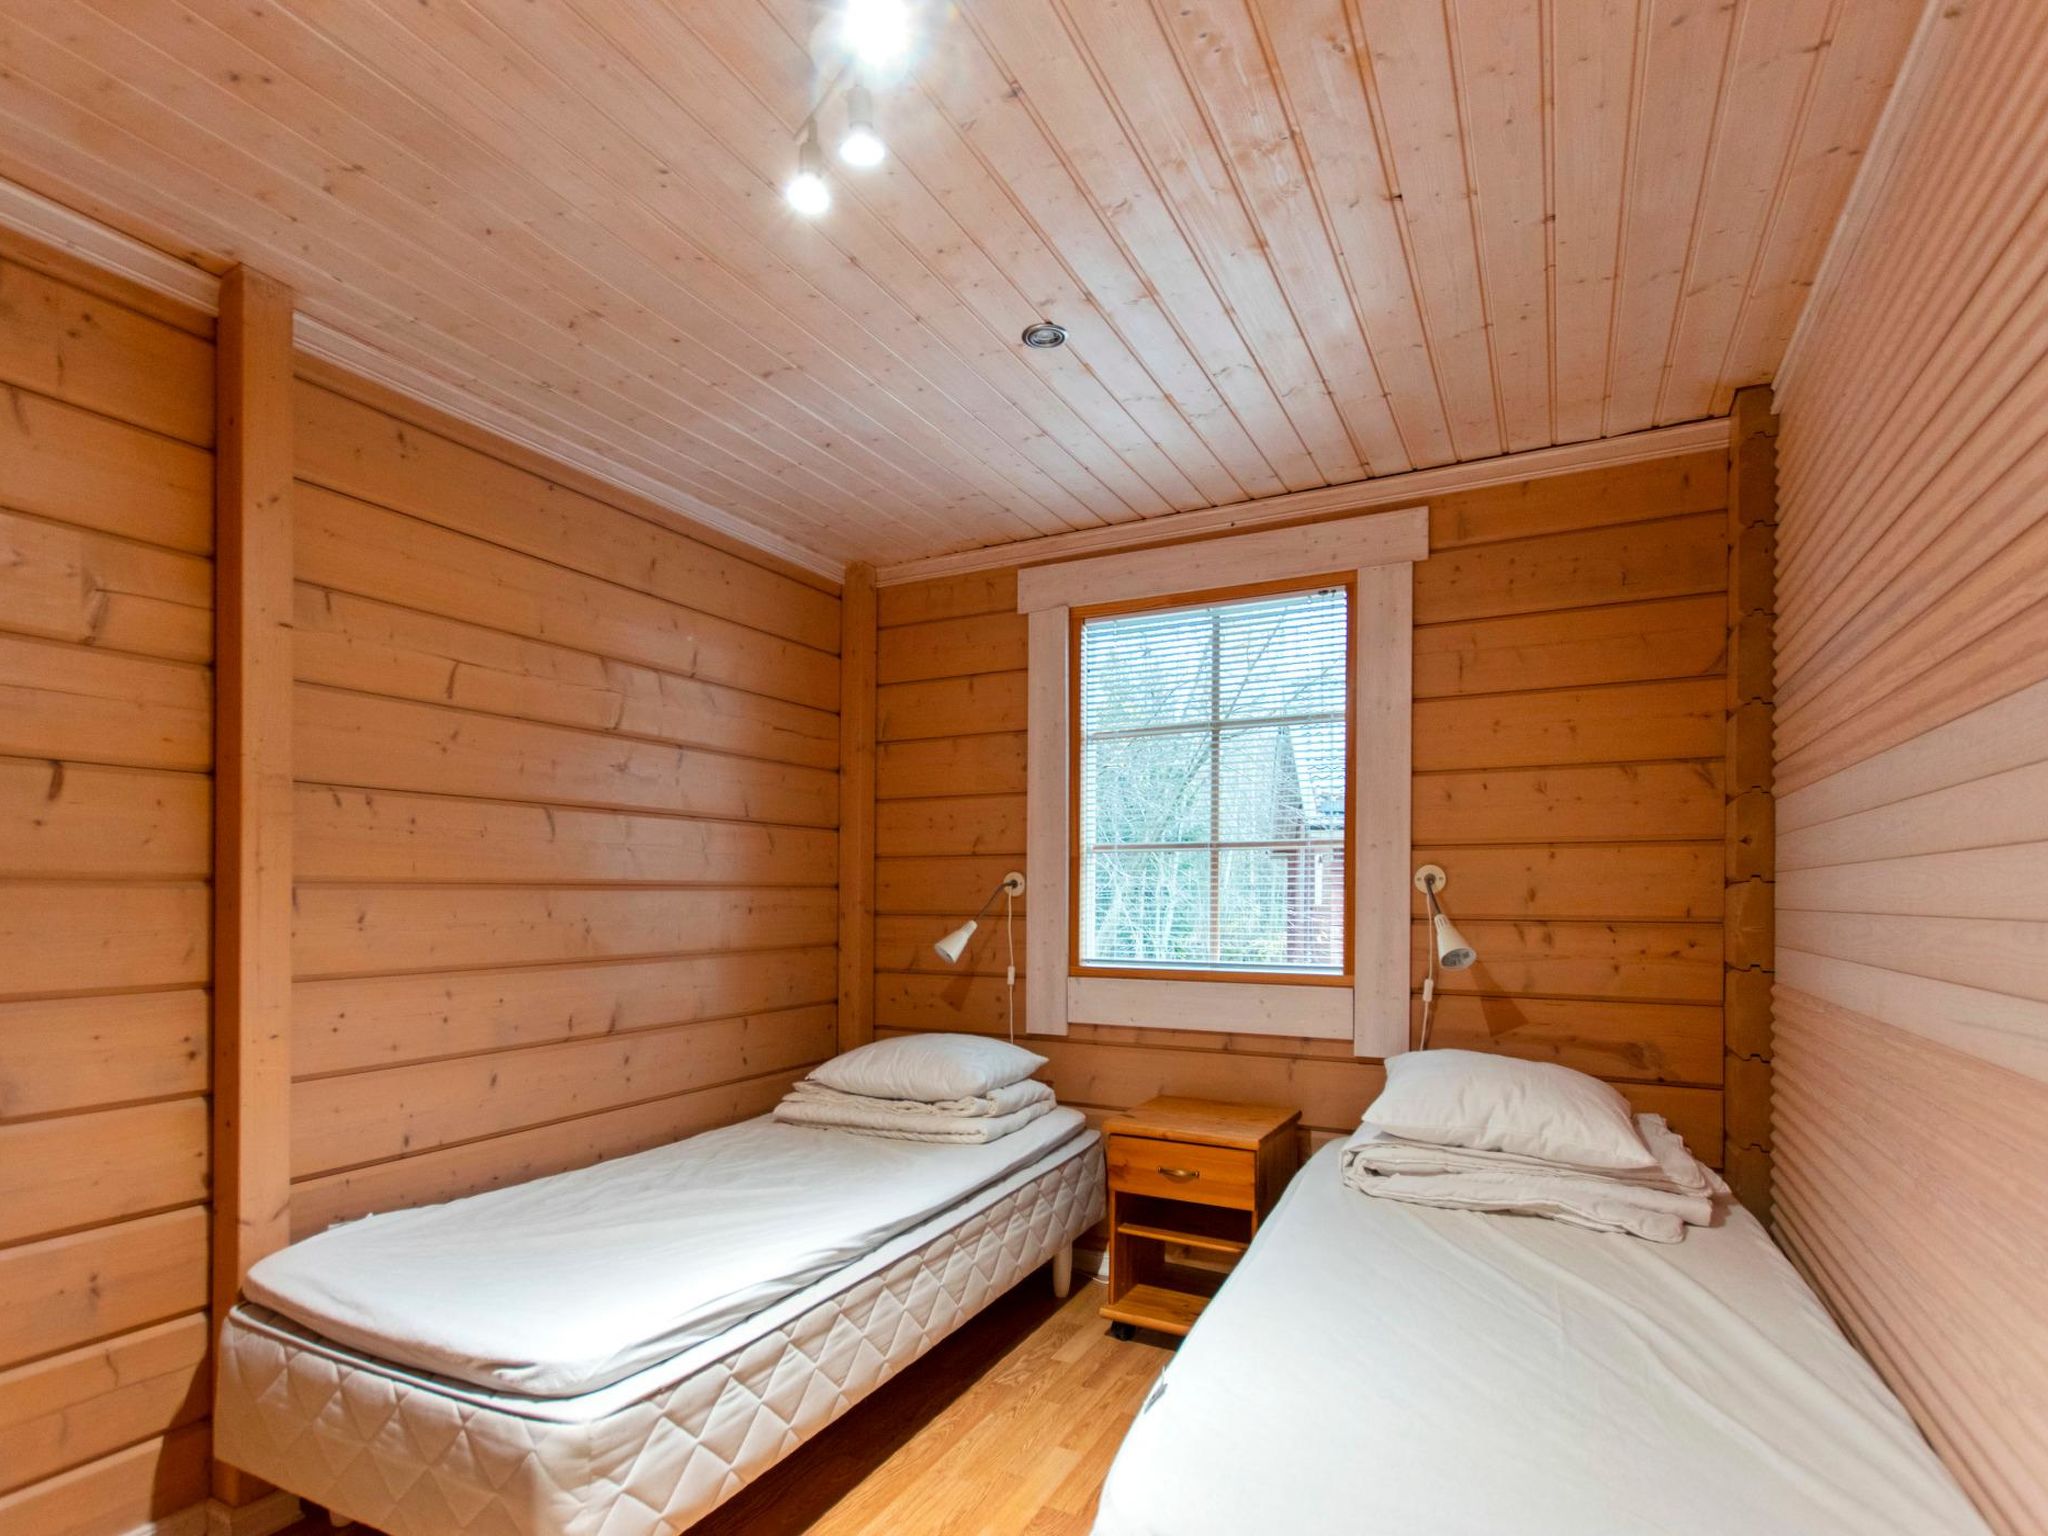 Photo 6 - 3 bedroom House in Pori with sauna